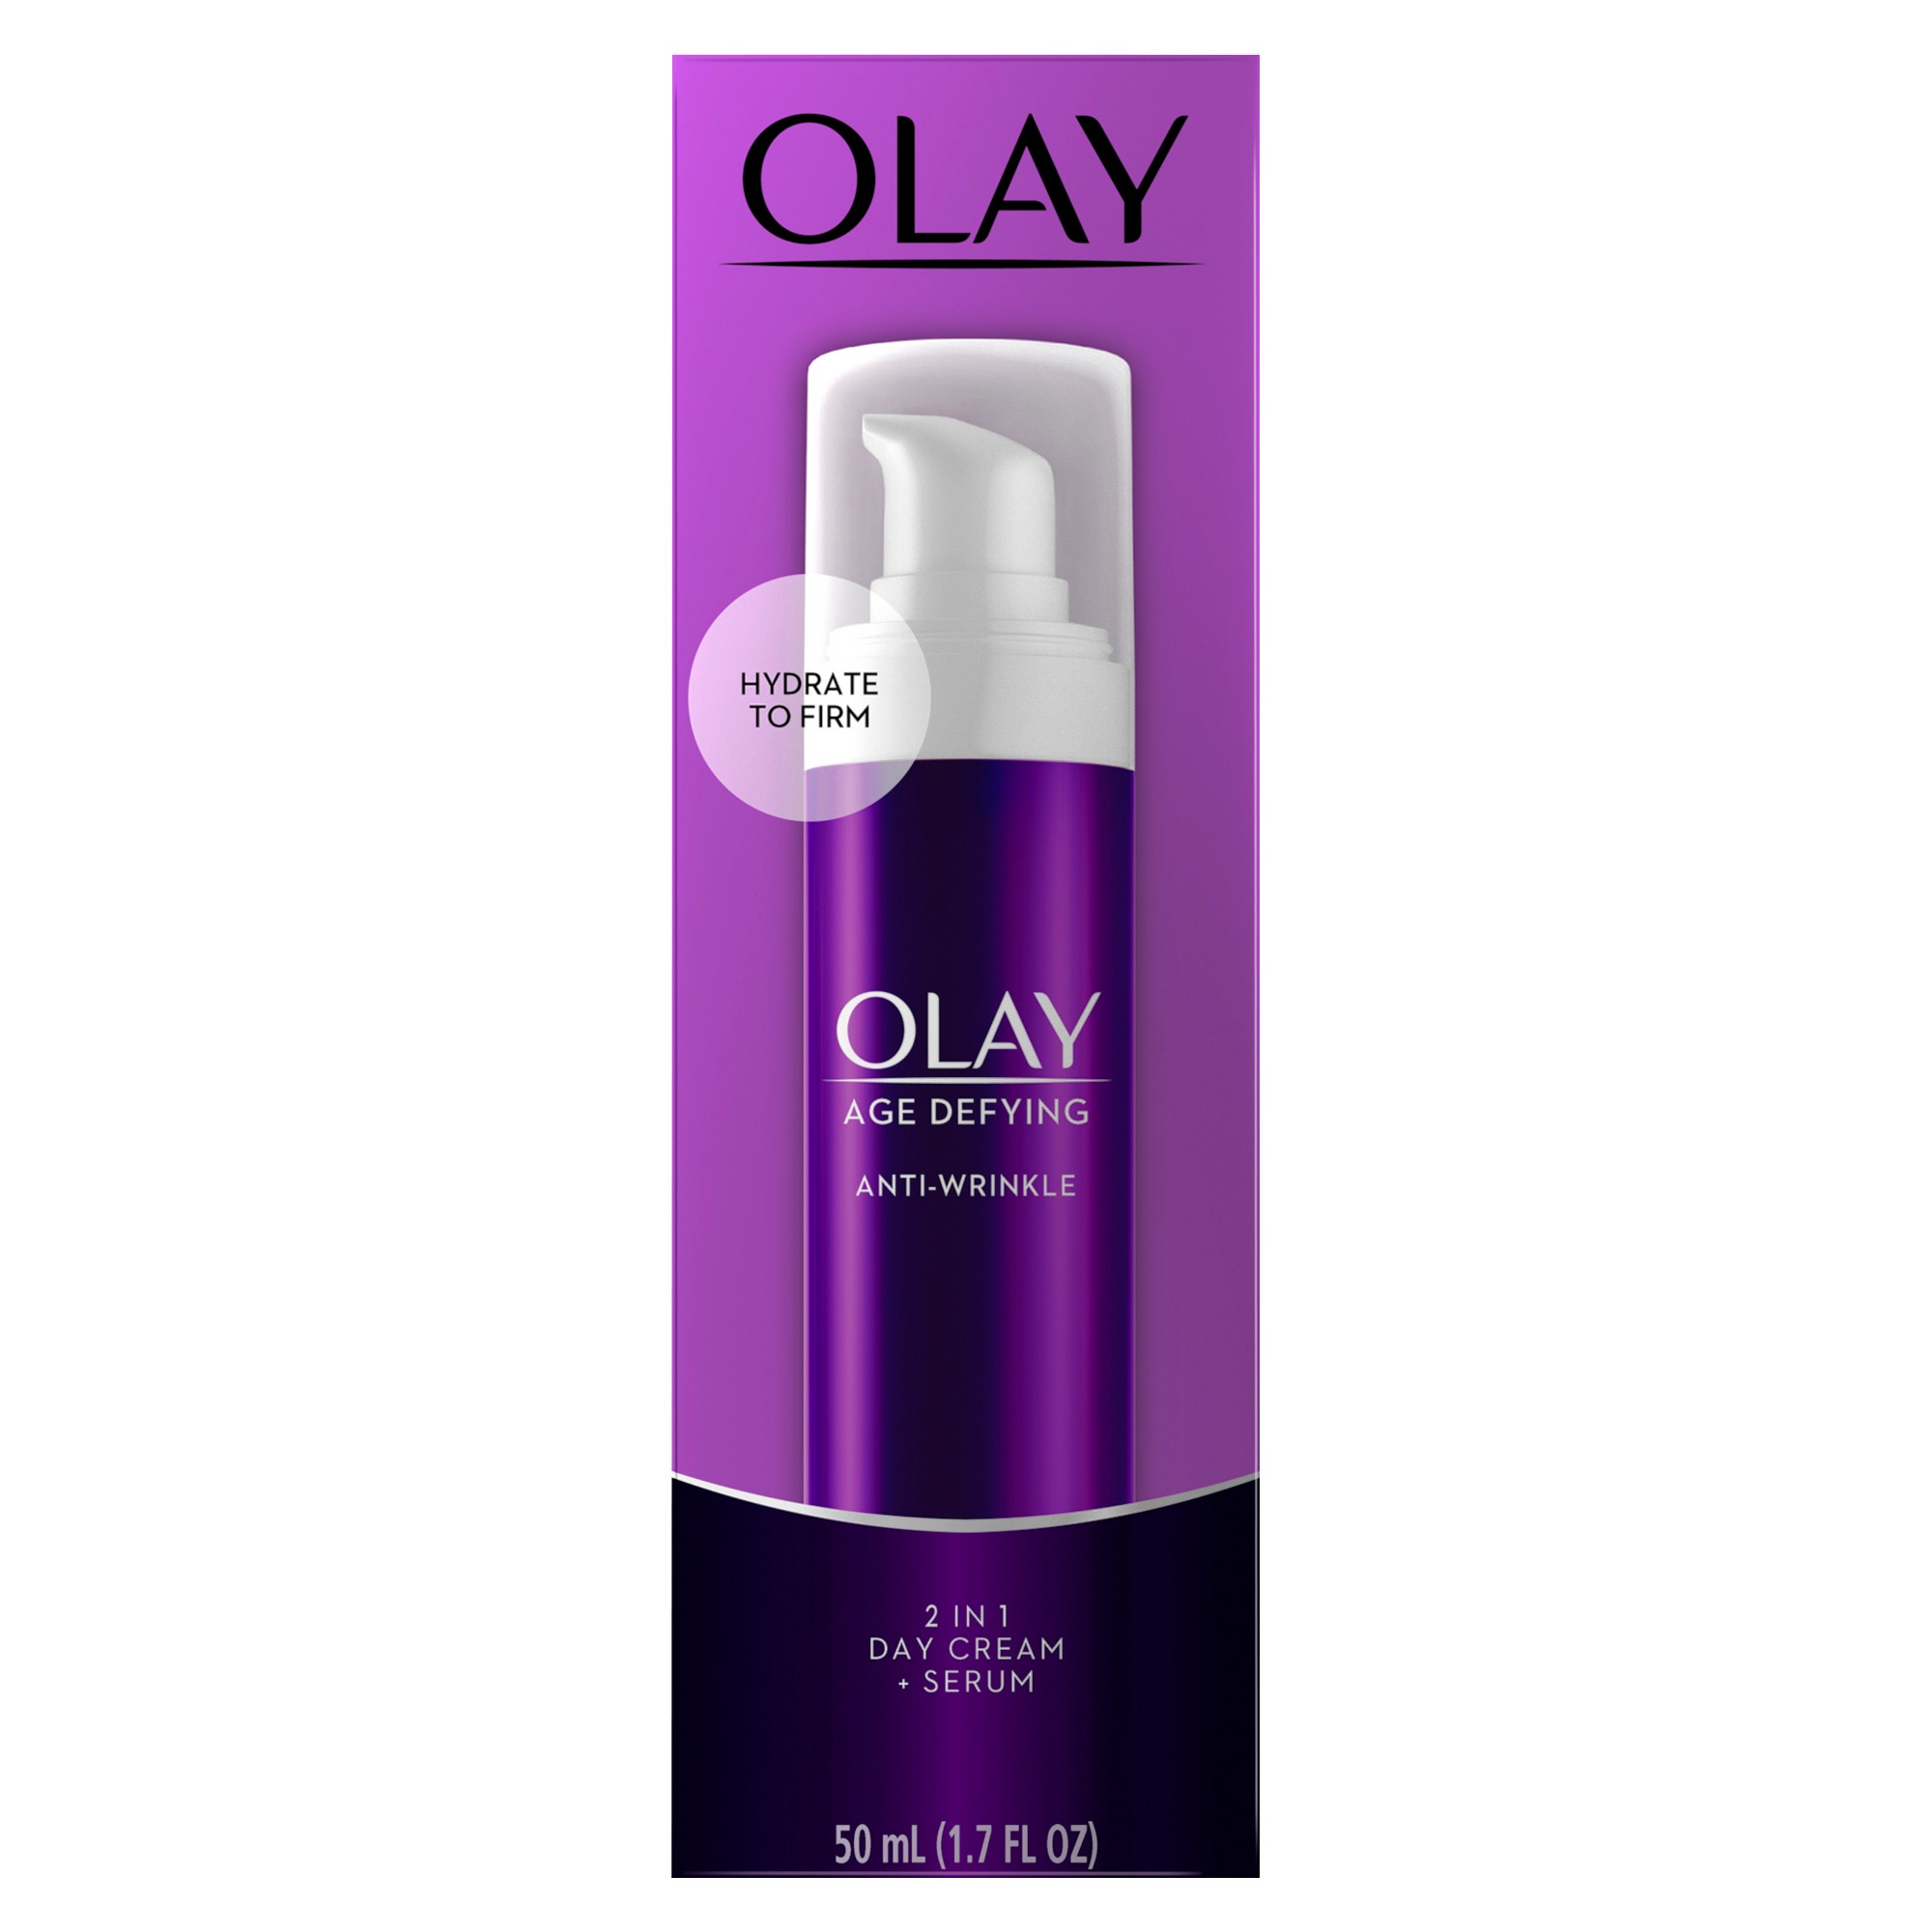 Olay Age Defying 2-in-1 Anti-Wrinkle Day Cream + Serum - 1.7 oz